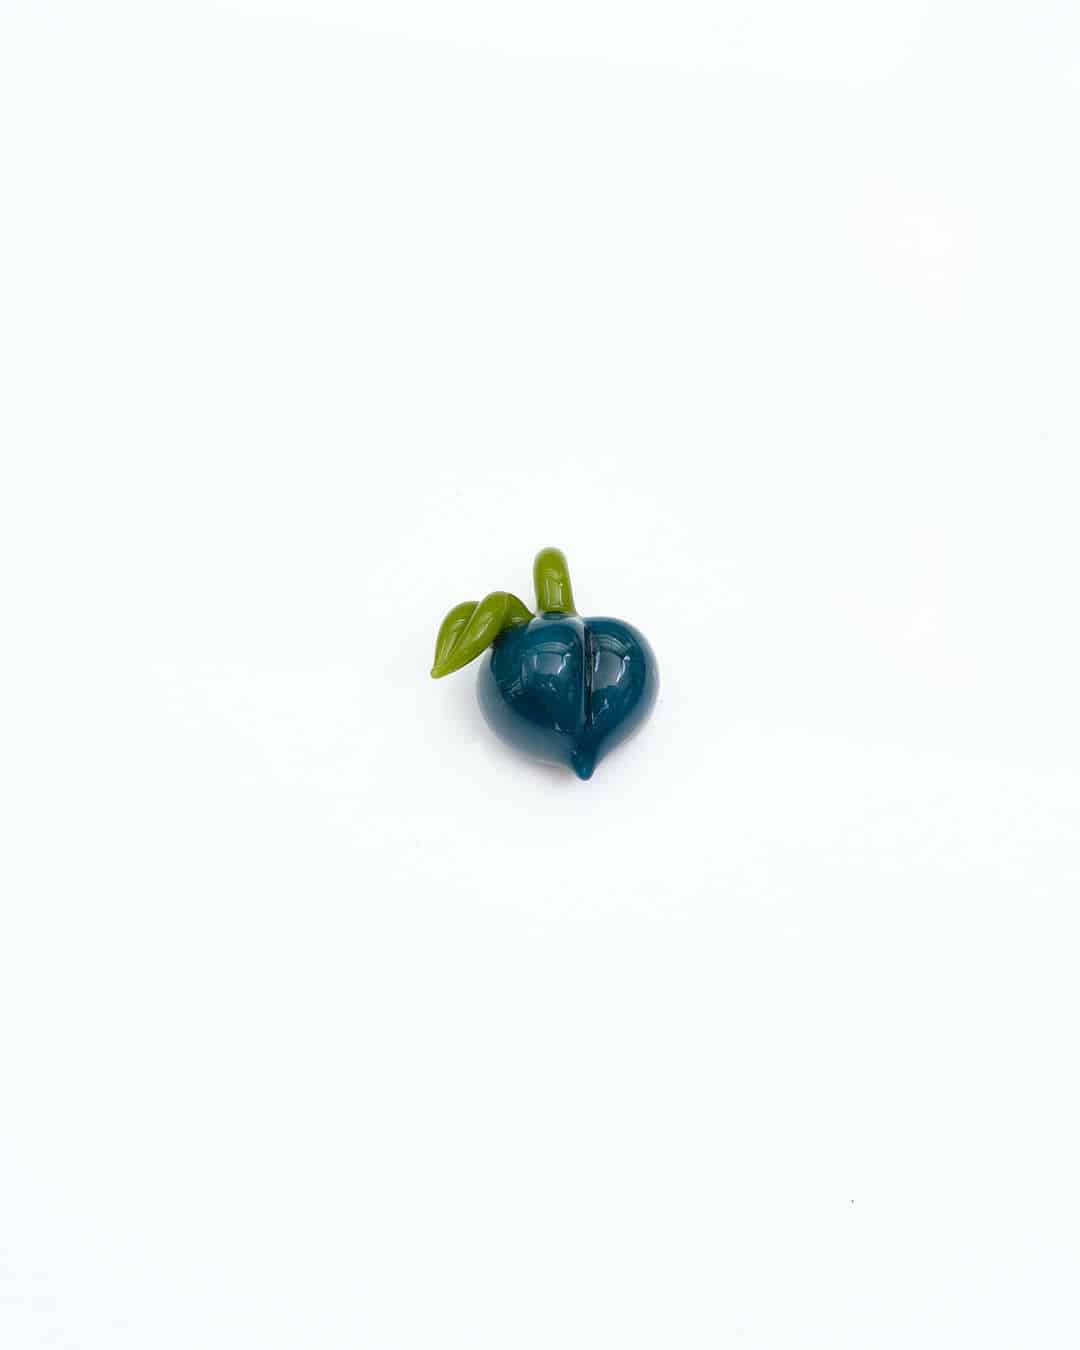 exquisite glass pendant - (34C) Blue Peach w/ Green Stem Pendant by Gnarla Carla